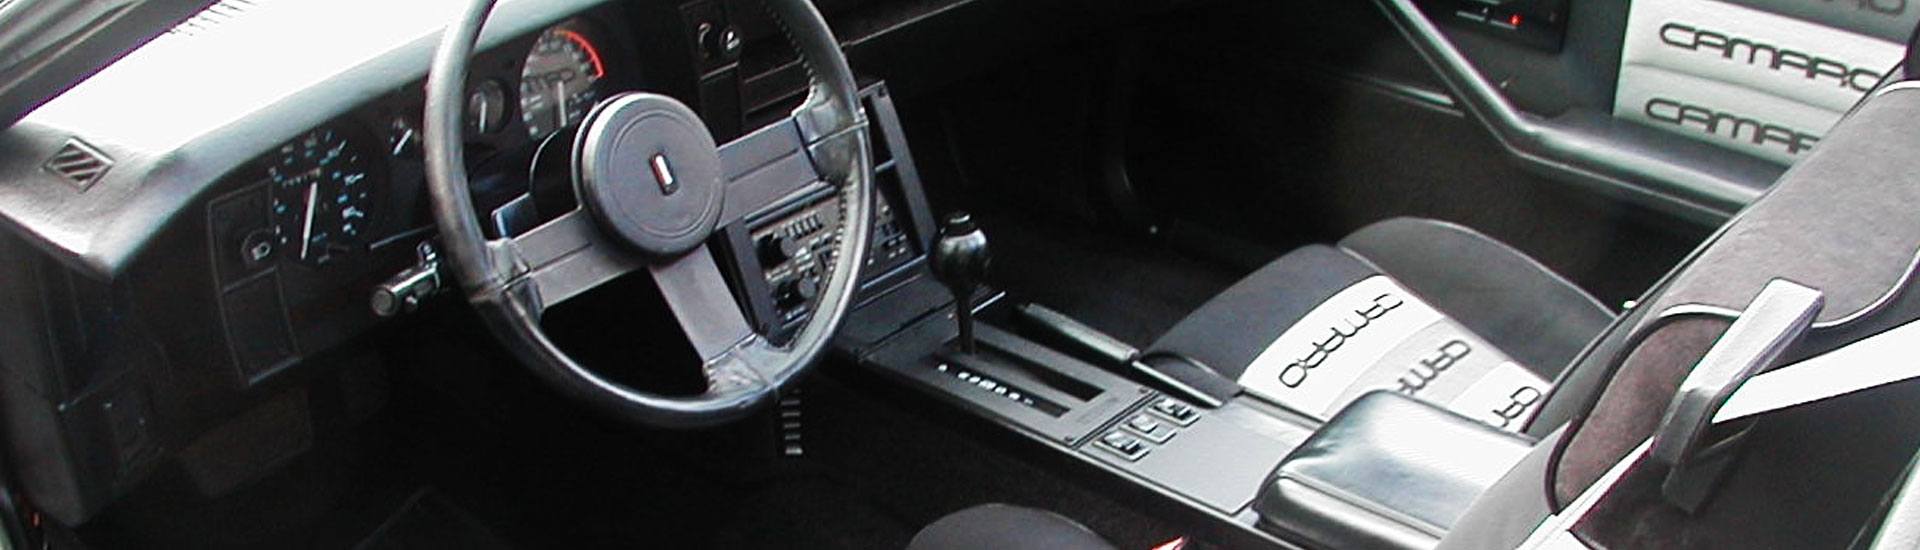 1989 Chevrolet Camaro Dash Kits